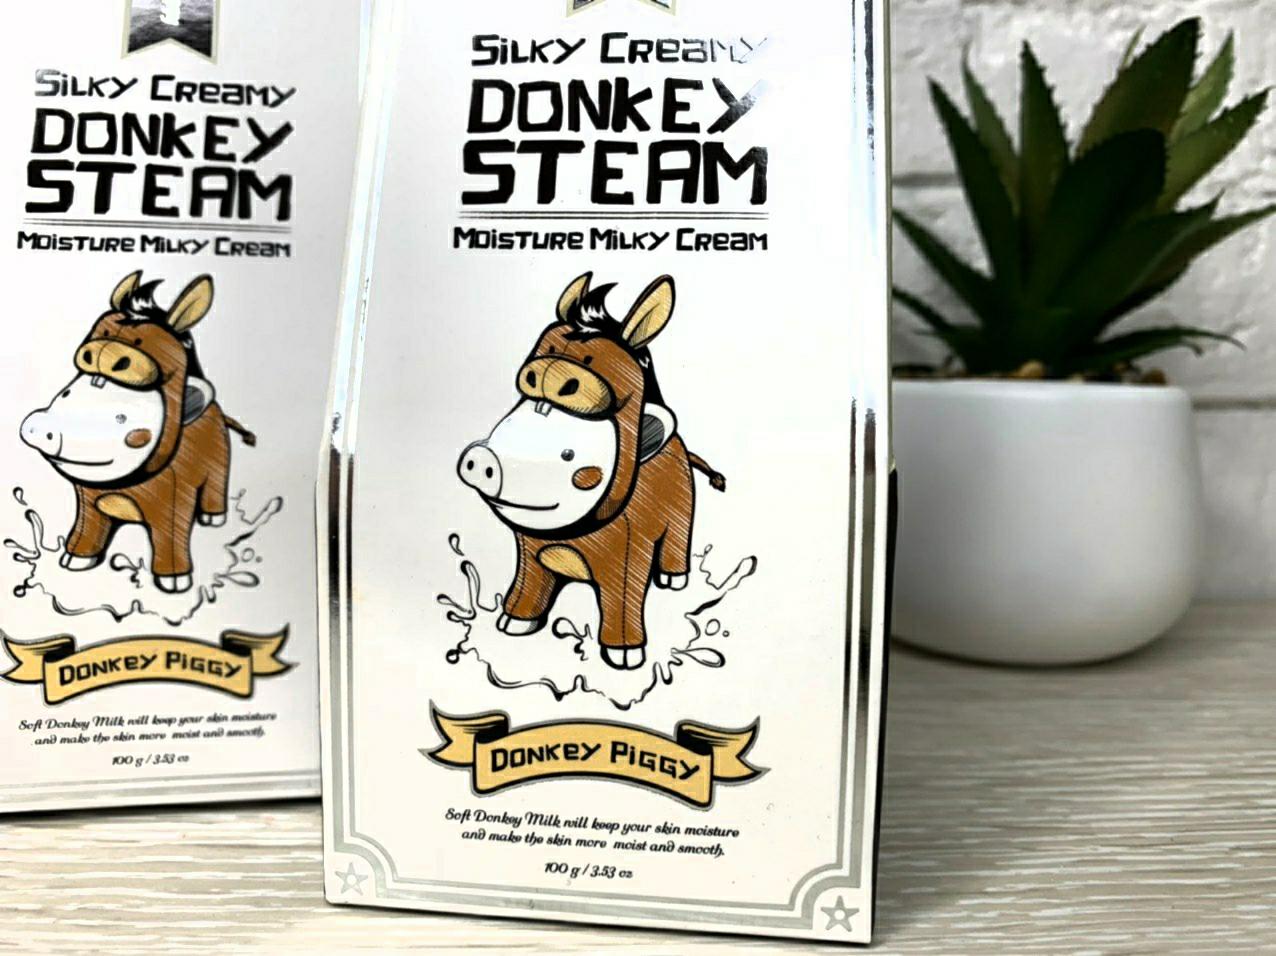 Silky cream donkey steam moisture milky cream фото 116